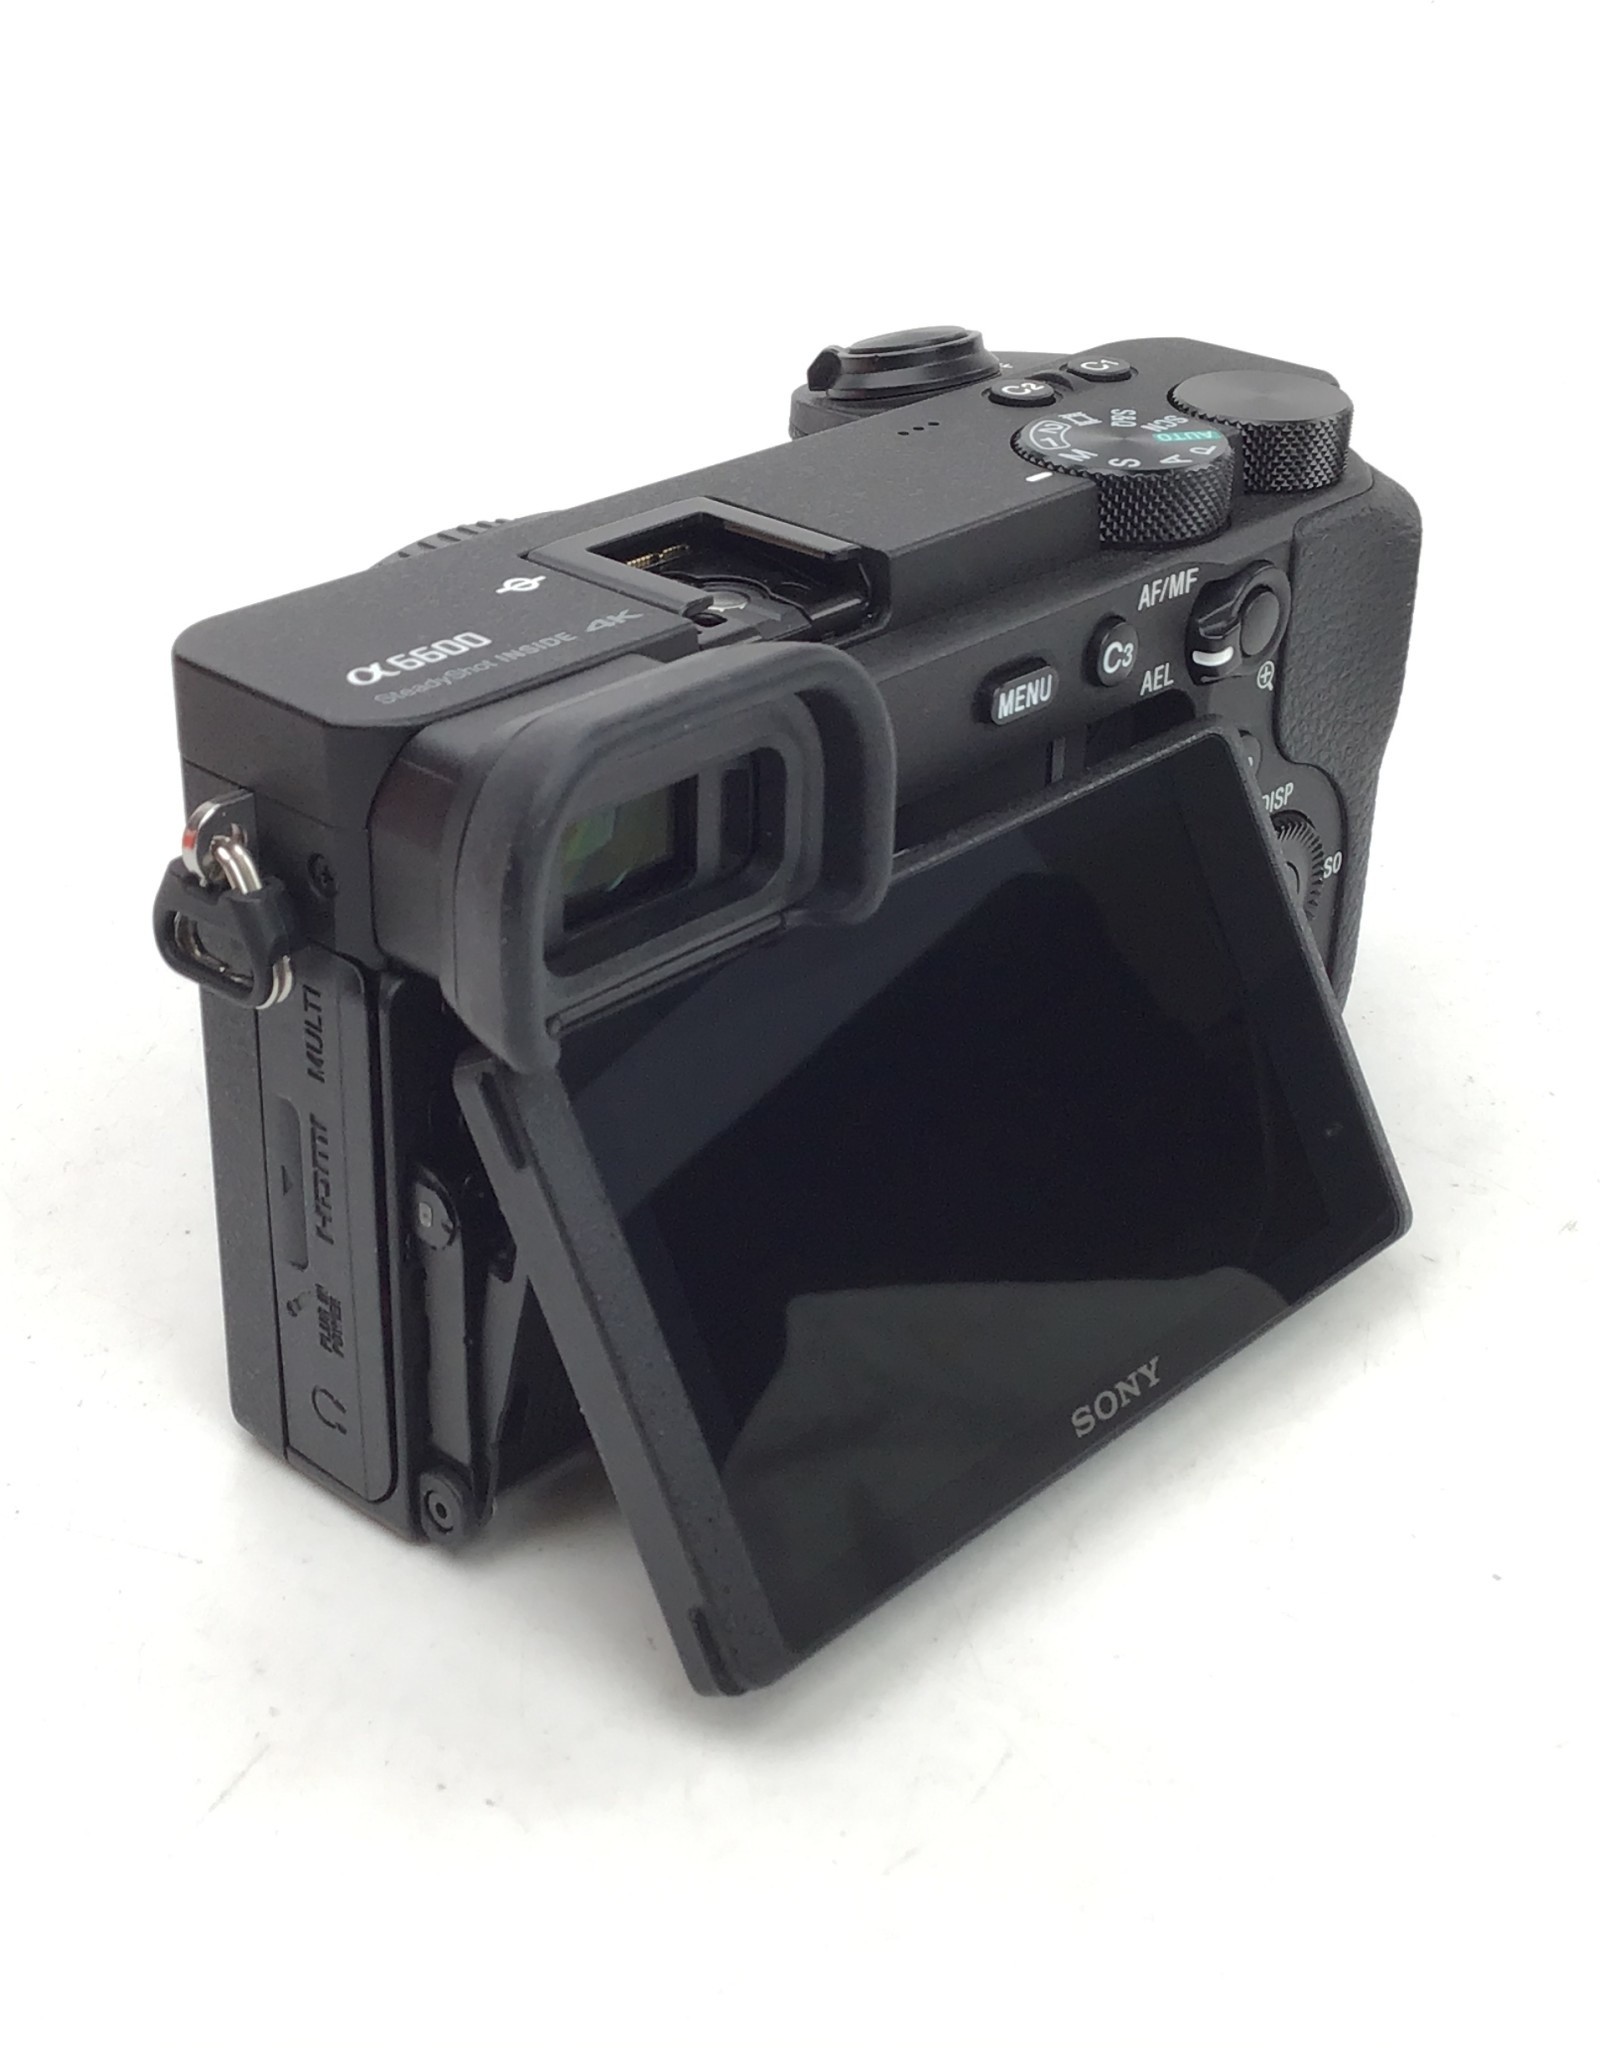 SONY Sony a6600 Camera Body in Box Used EX